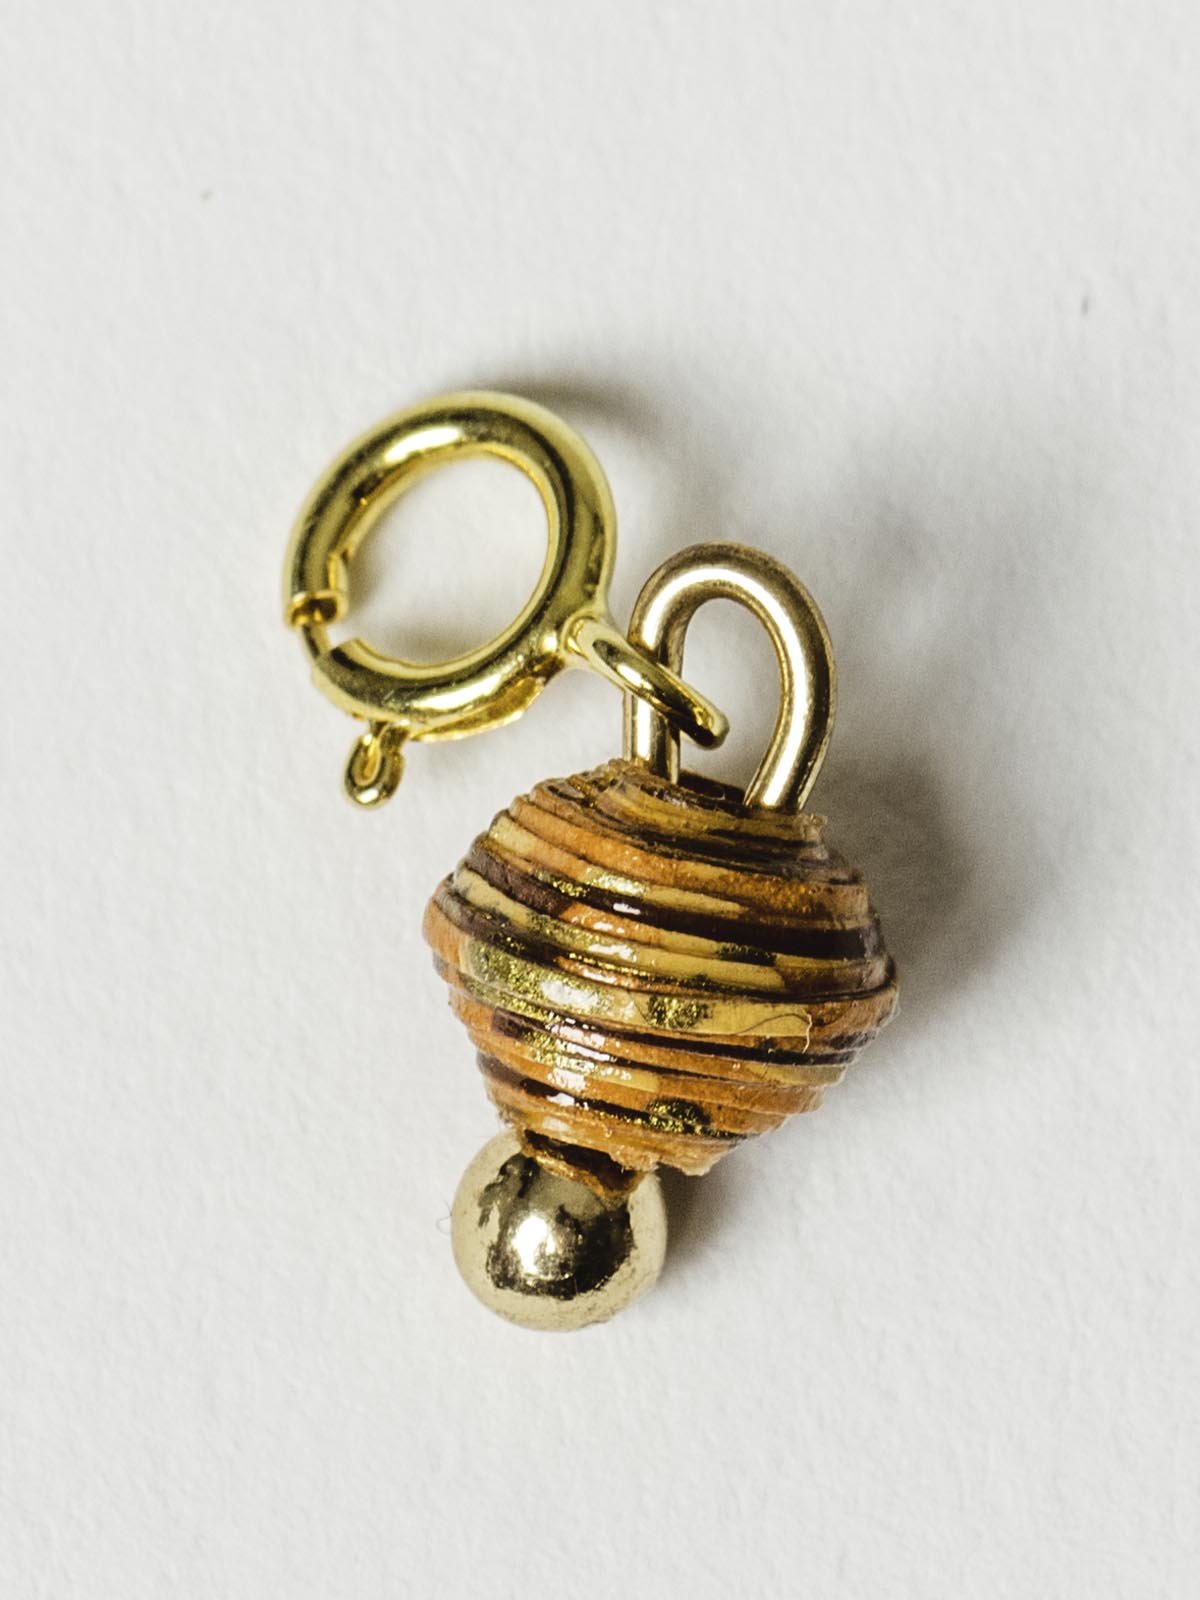 Burnt orange bead charm on gold clasp. 